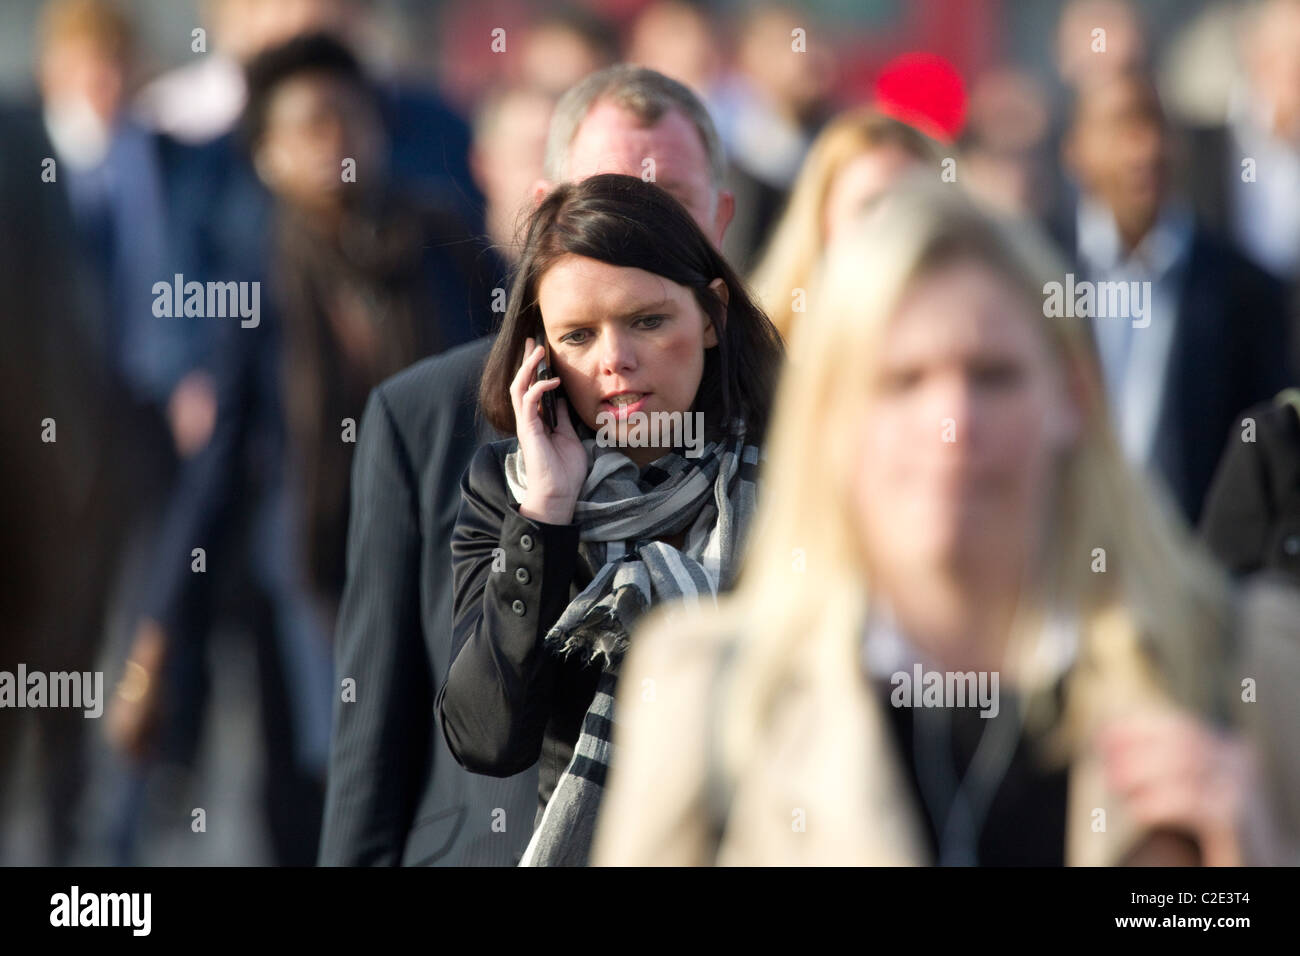 Frau am Handy unter Pendler im Berufsverkehr, London Bridge, England, UK. Foto: Jeff Gilbert Stockfoto